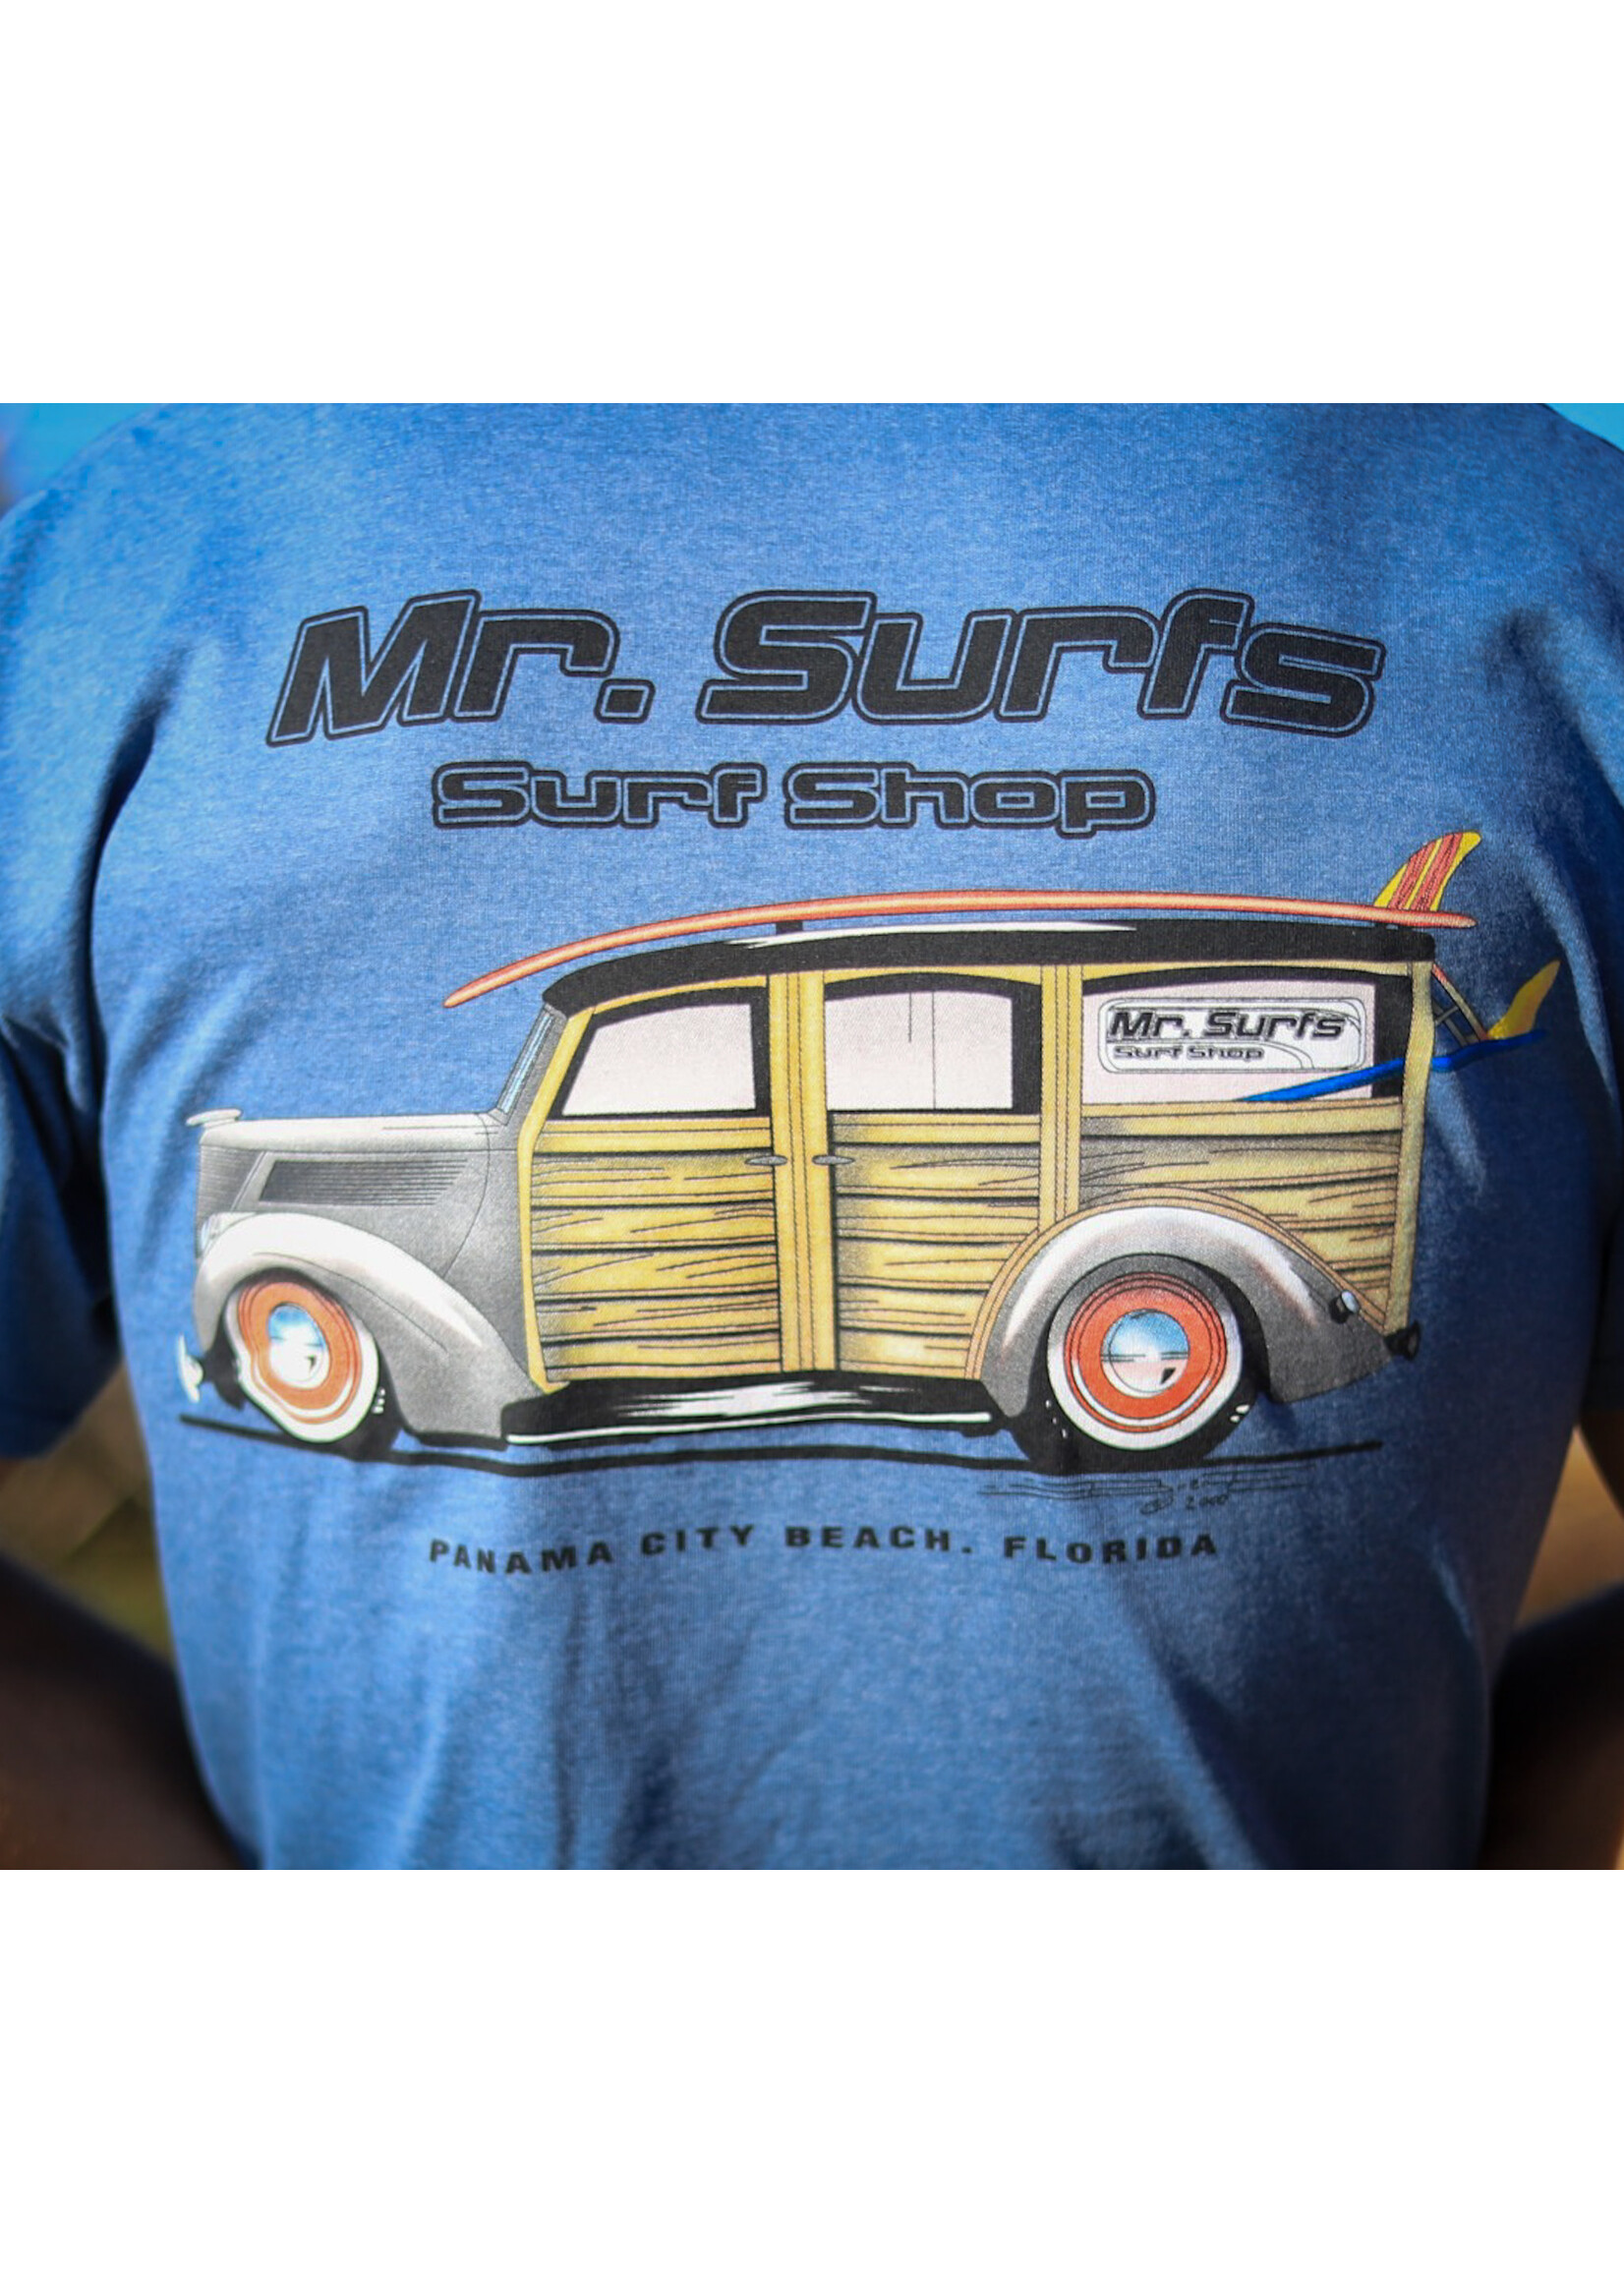 Mr Surfs Mr Surfs Woody Short Sleeve T-Shirt